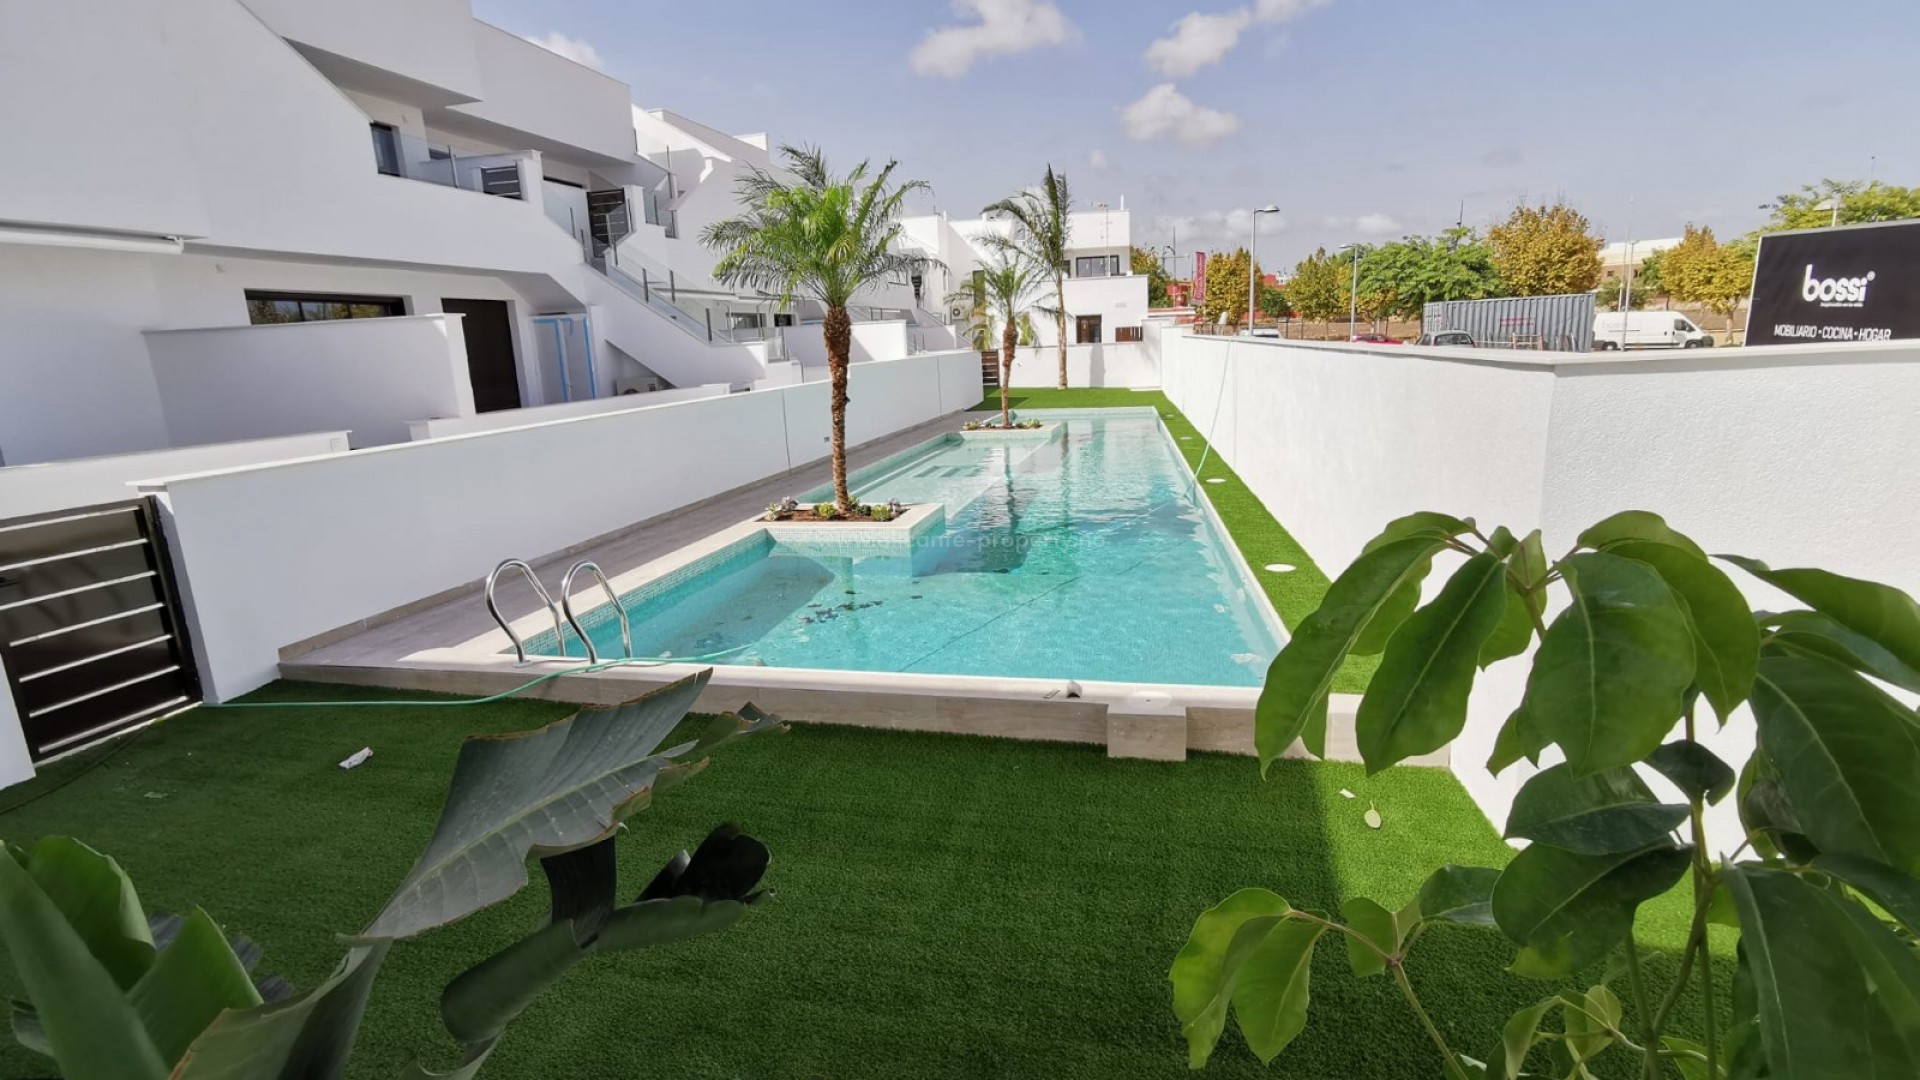 Exclusive residential complex of flats/apartments in Pilar de Horadada, 2/3 bedrooms, 2 bathrooms, large private solarium. Great shared pool